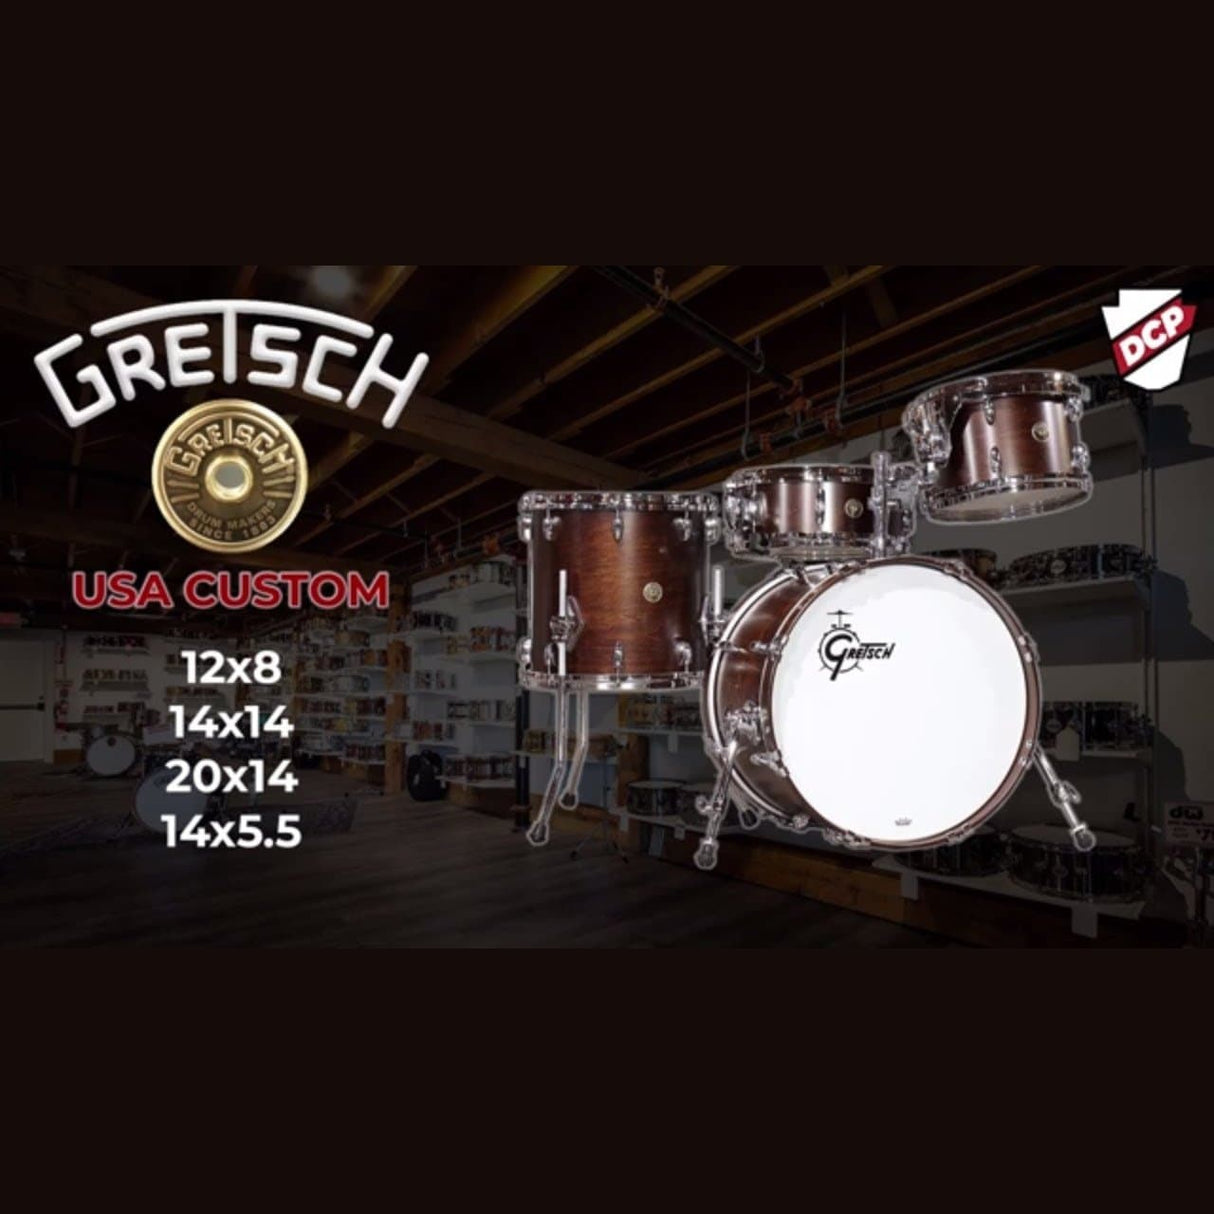 Gretsch USA Custom 4pc Drum Set 20/12/14/14 Satin Antique Maple w/Mount